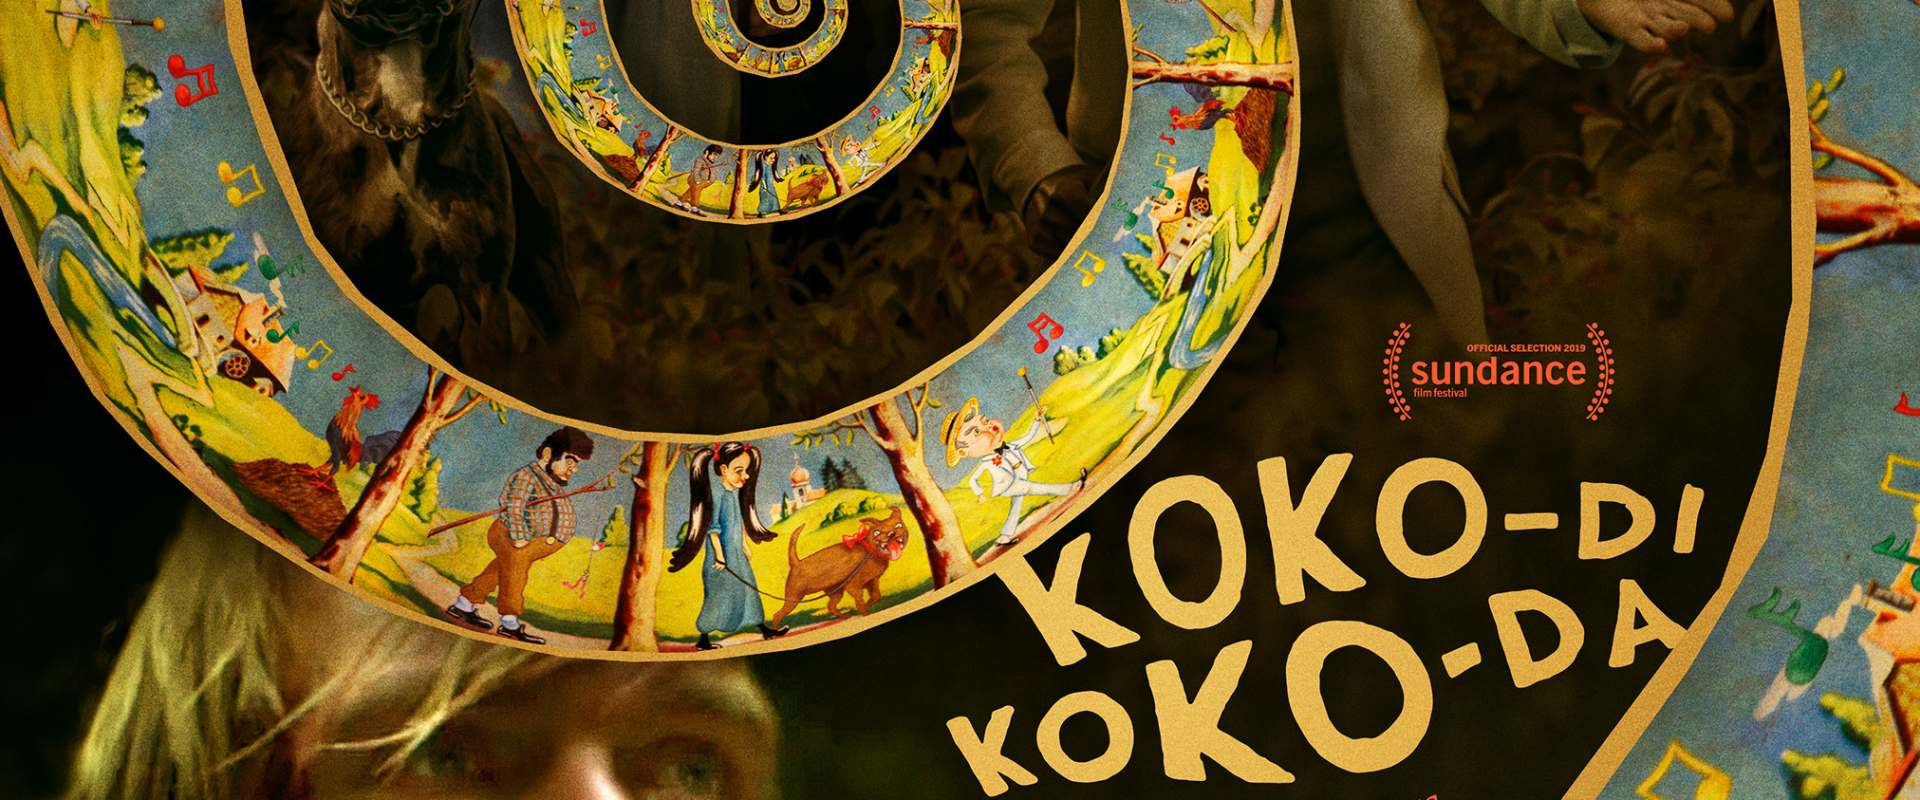 Koko-di Koko-da background 2